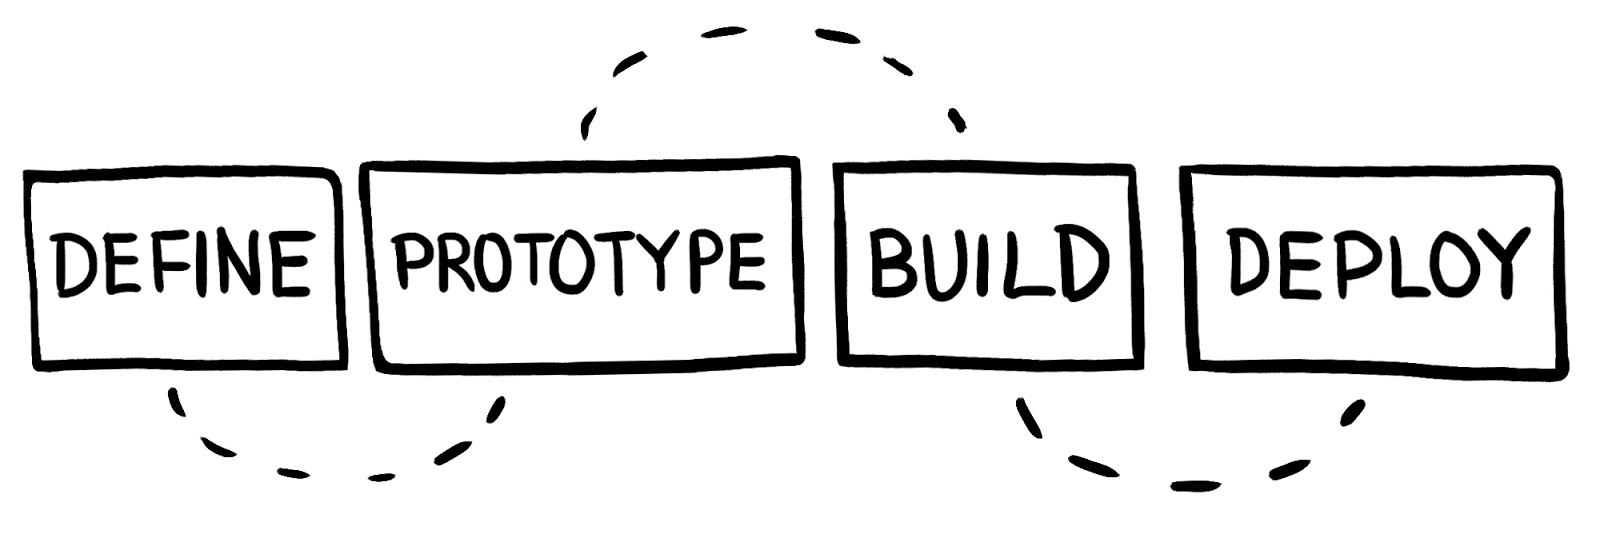 dashboard design process: Define>Prototype>Build>Deploy